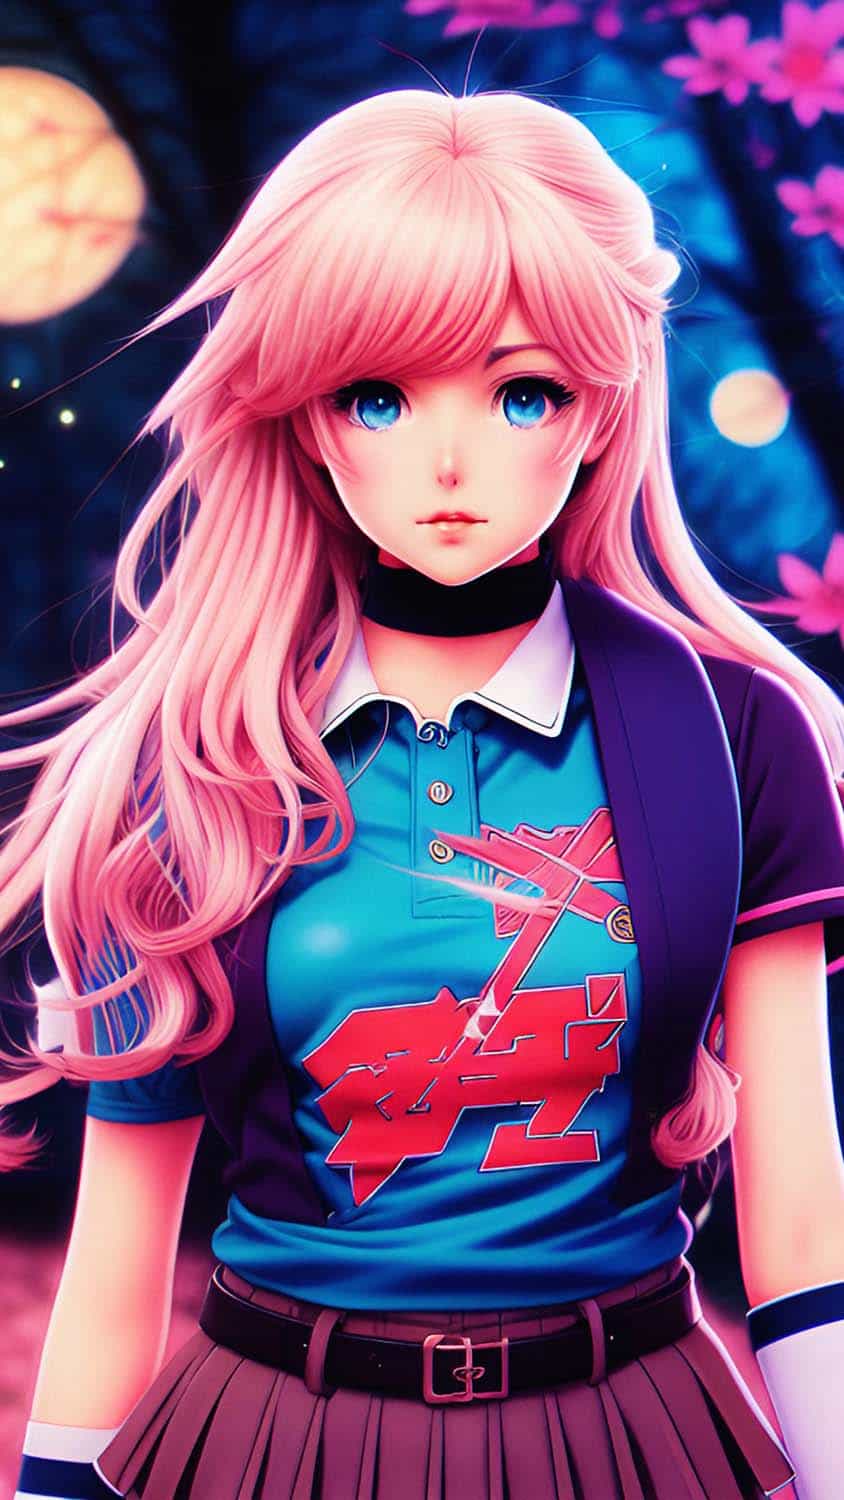 Anime Girl Pink Hairs iPhone Wallpaper HD